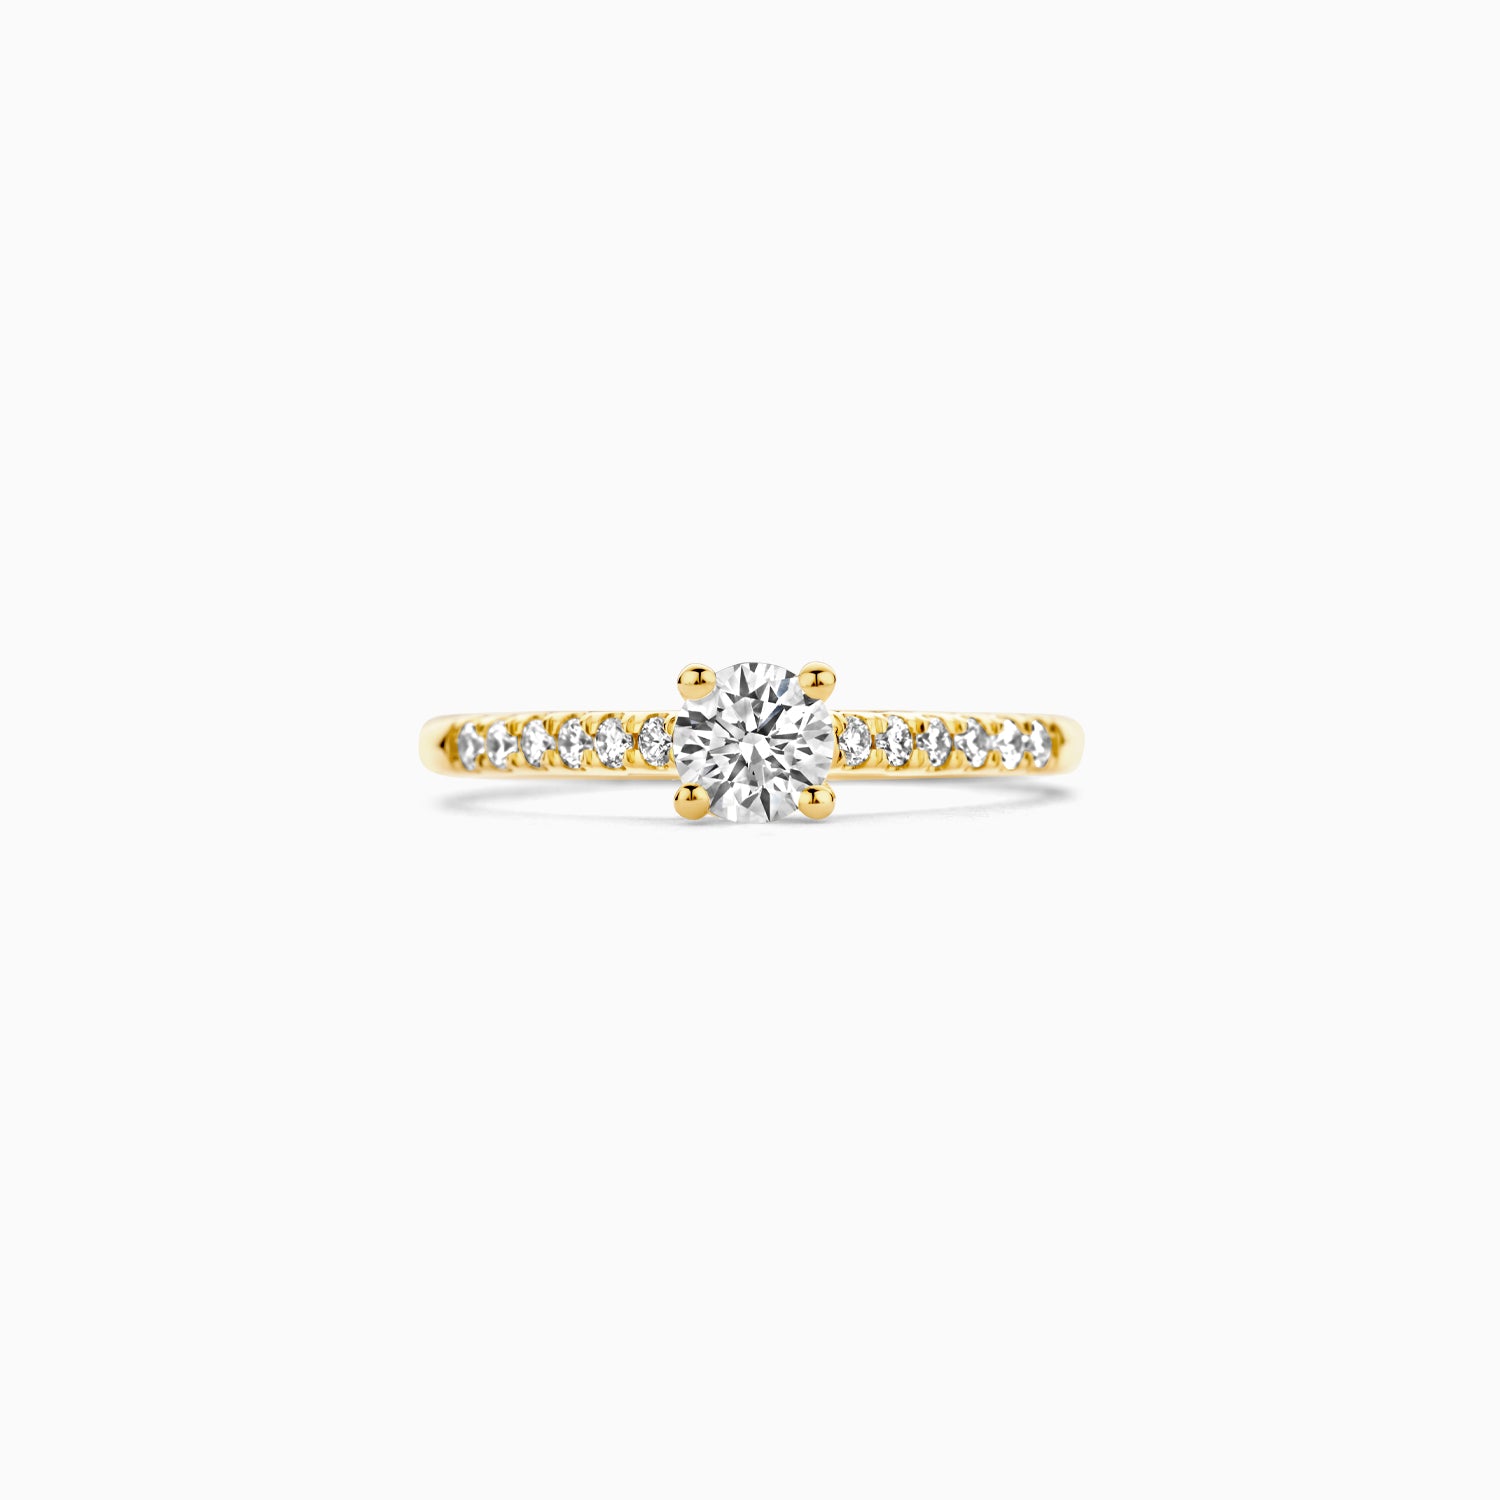 Lab diamonds ring LG1006Y - 14k Yellow gold